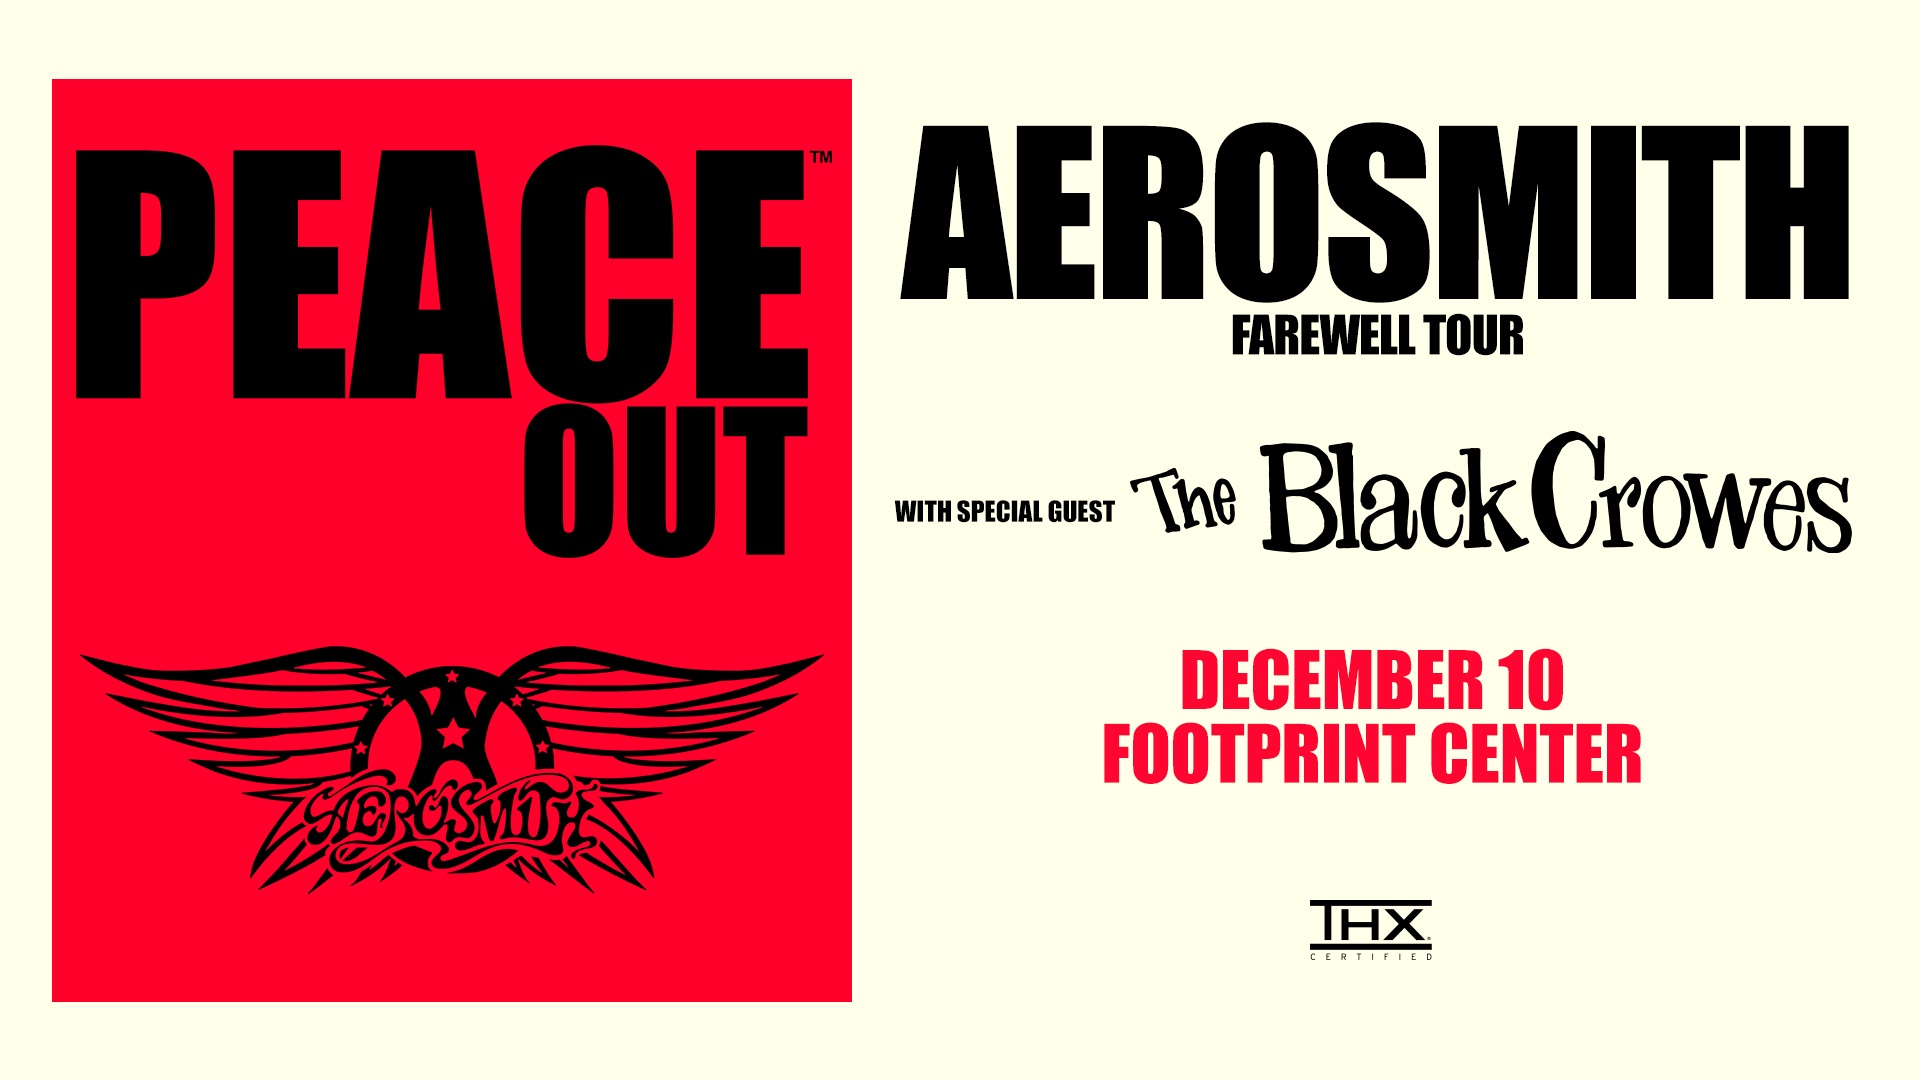 aerosmith peace out tour dates 2023